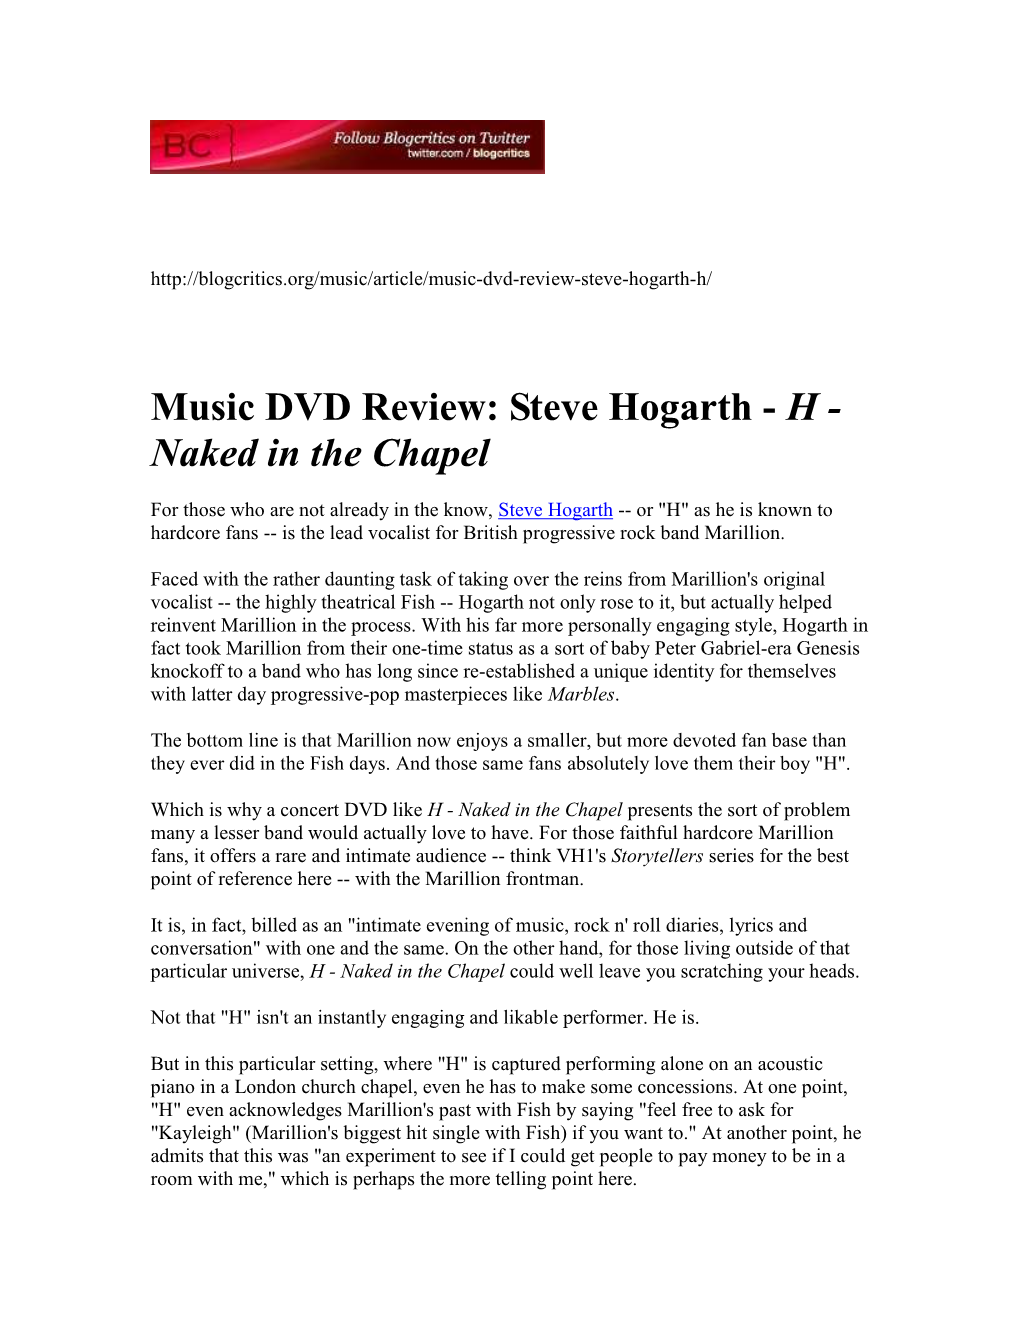 Music DVD Review: Steve Hogarth - H - Naked in the Chapel